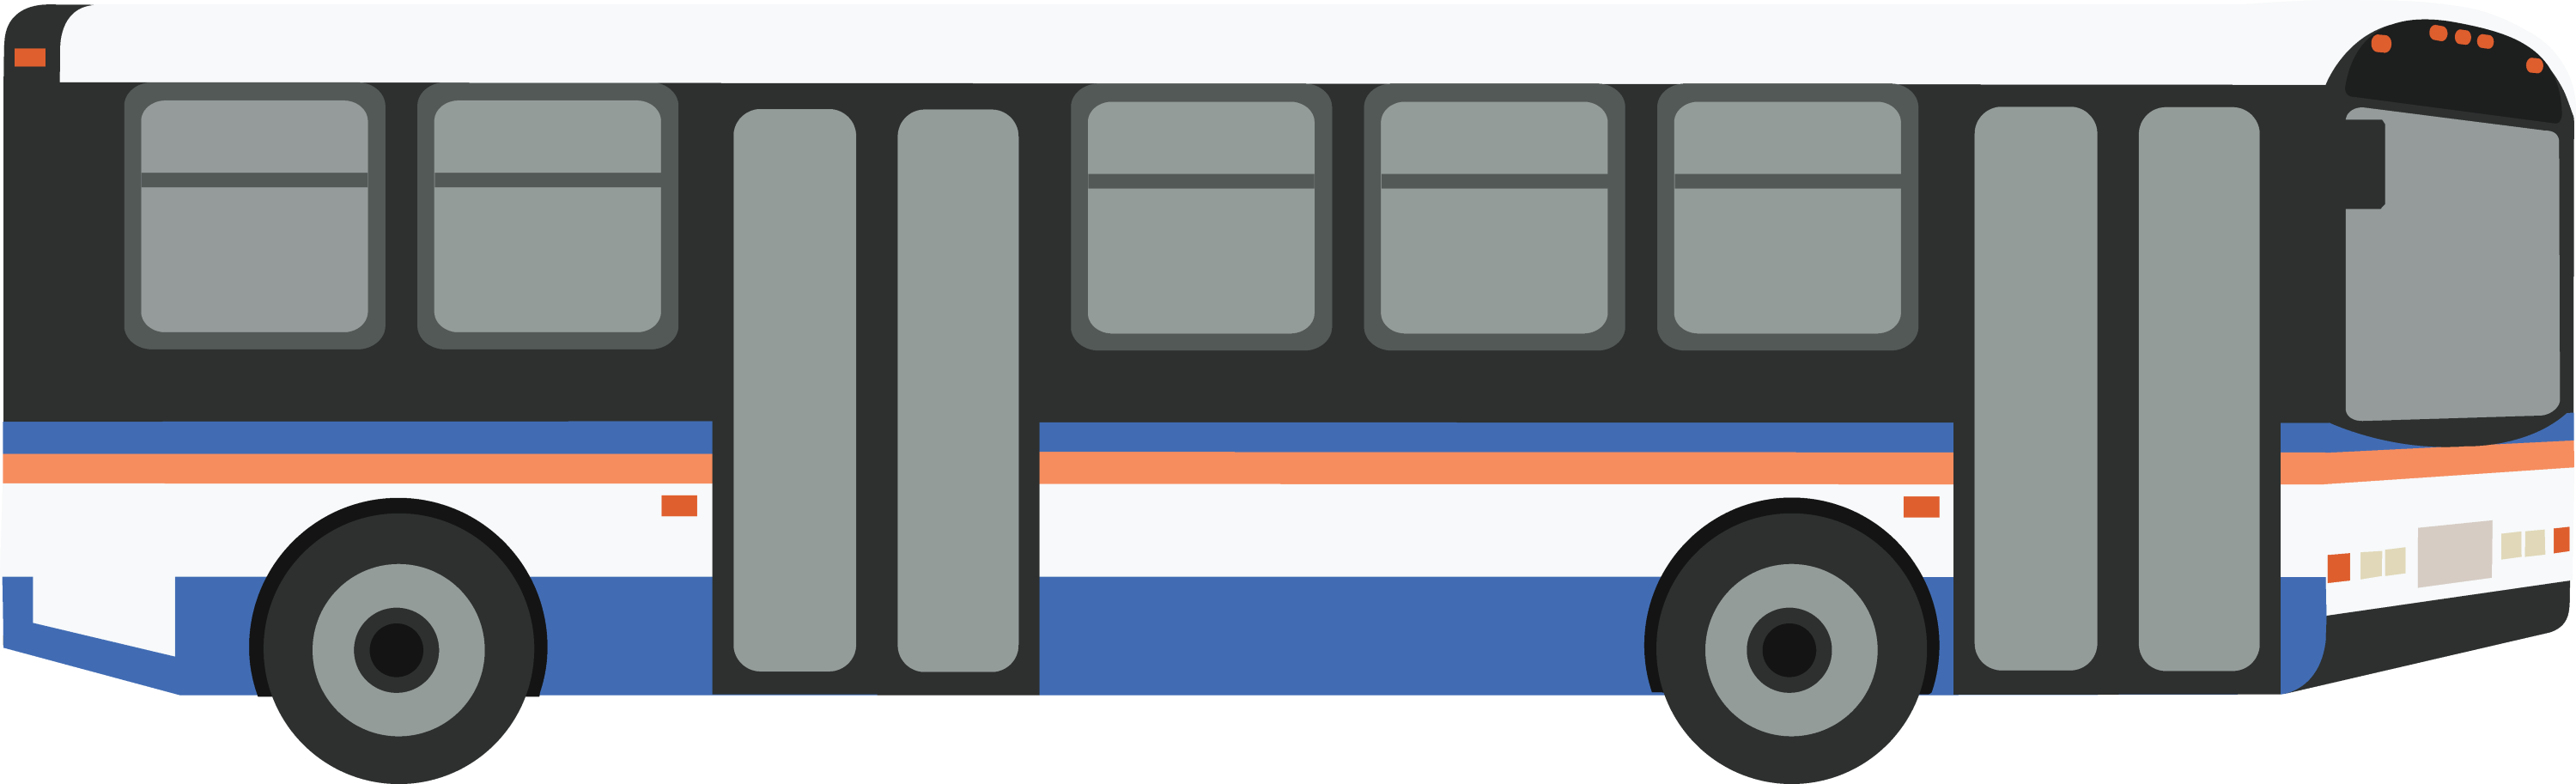 Public Transportation Bus - Free Clip Art